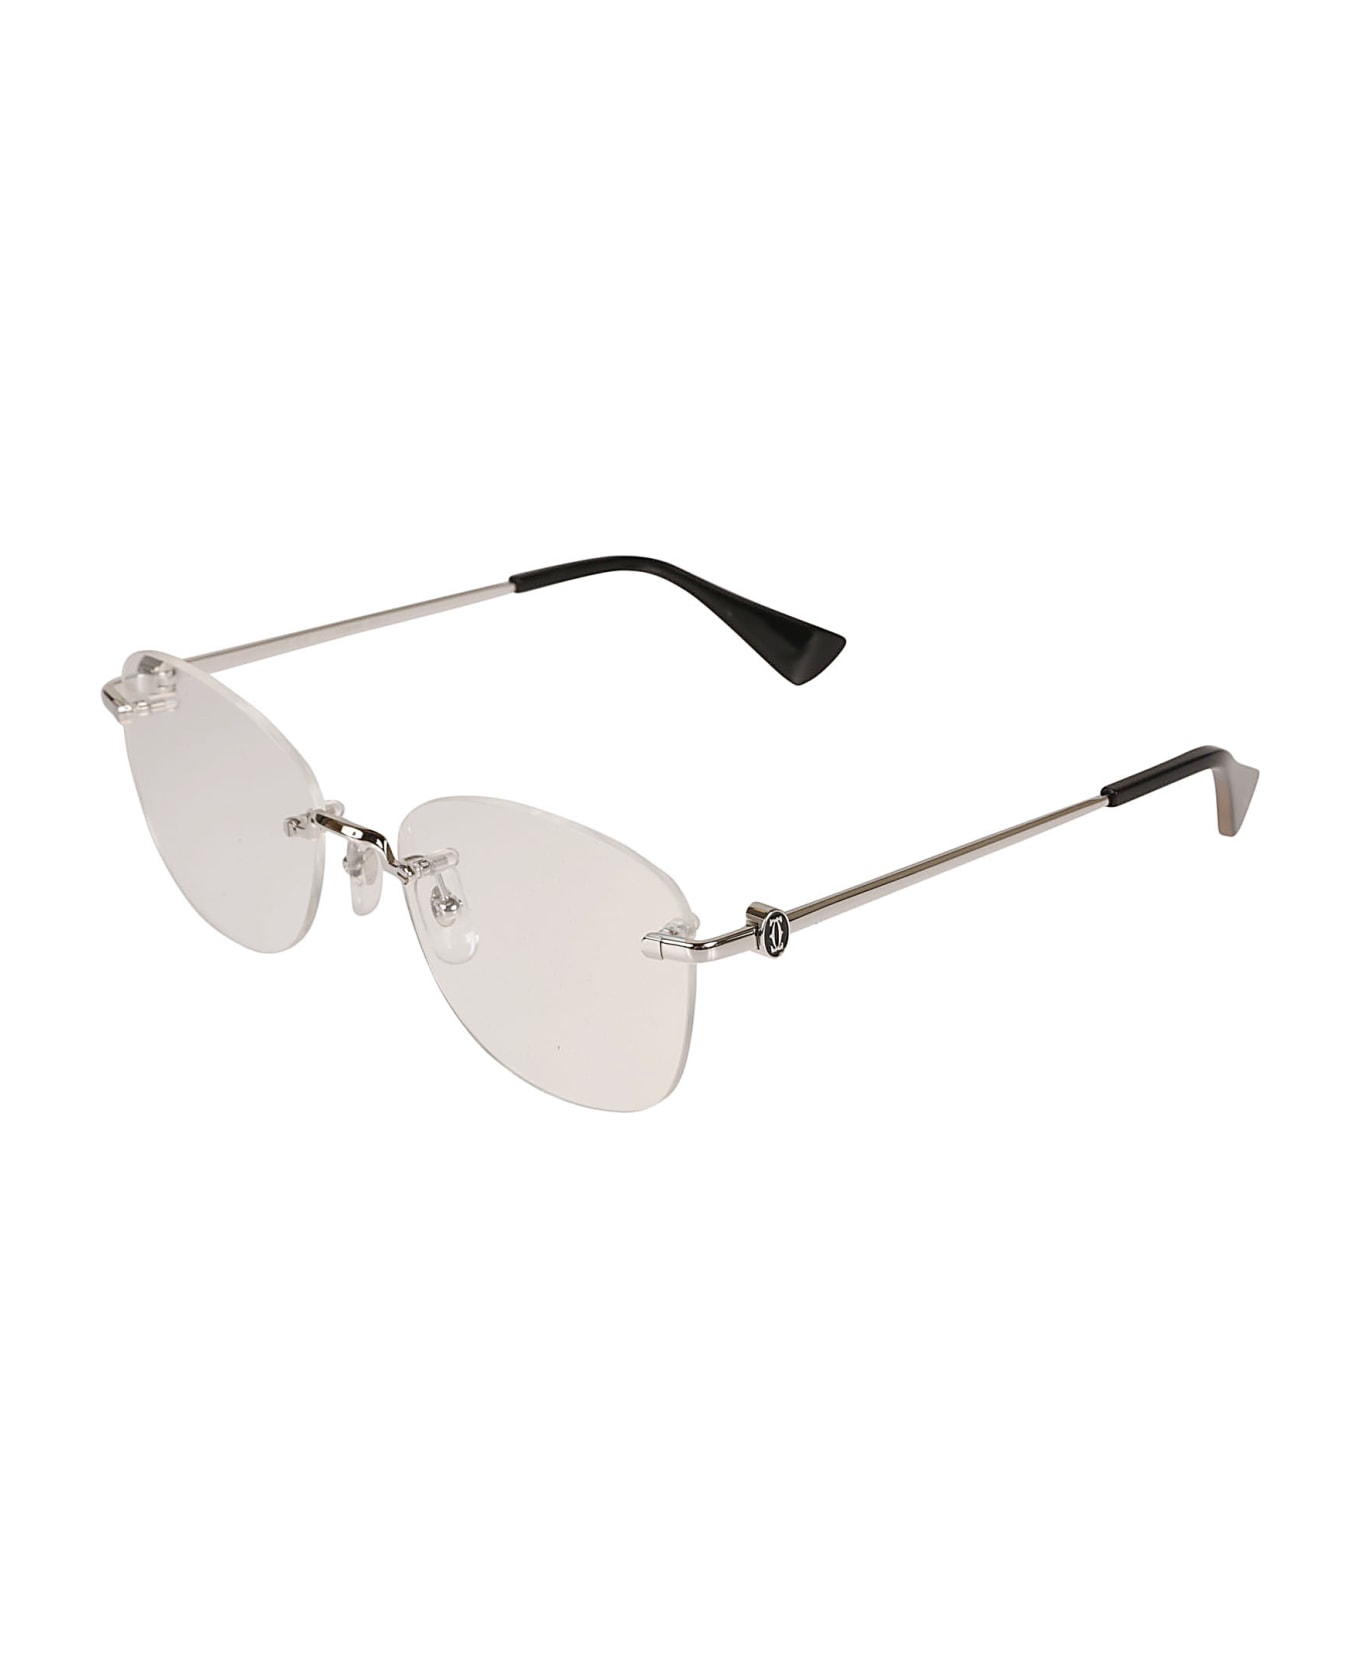 Cartier Eyewear Rimless Sunglasses - Silver